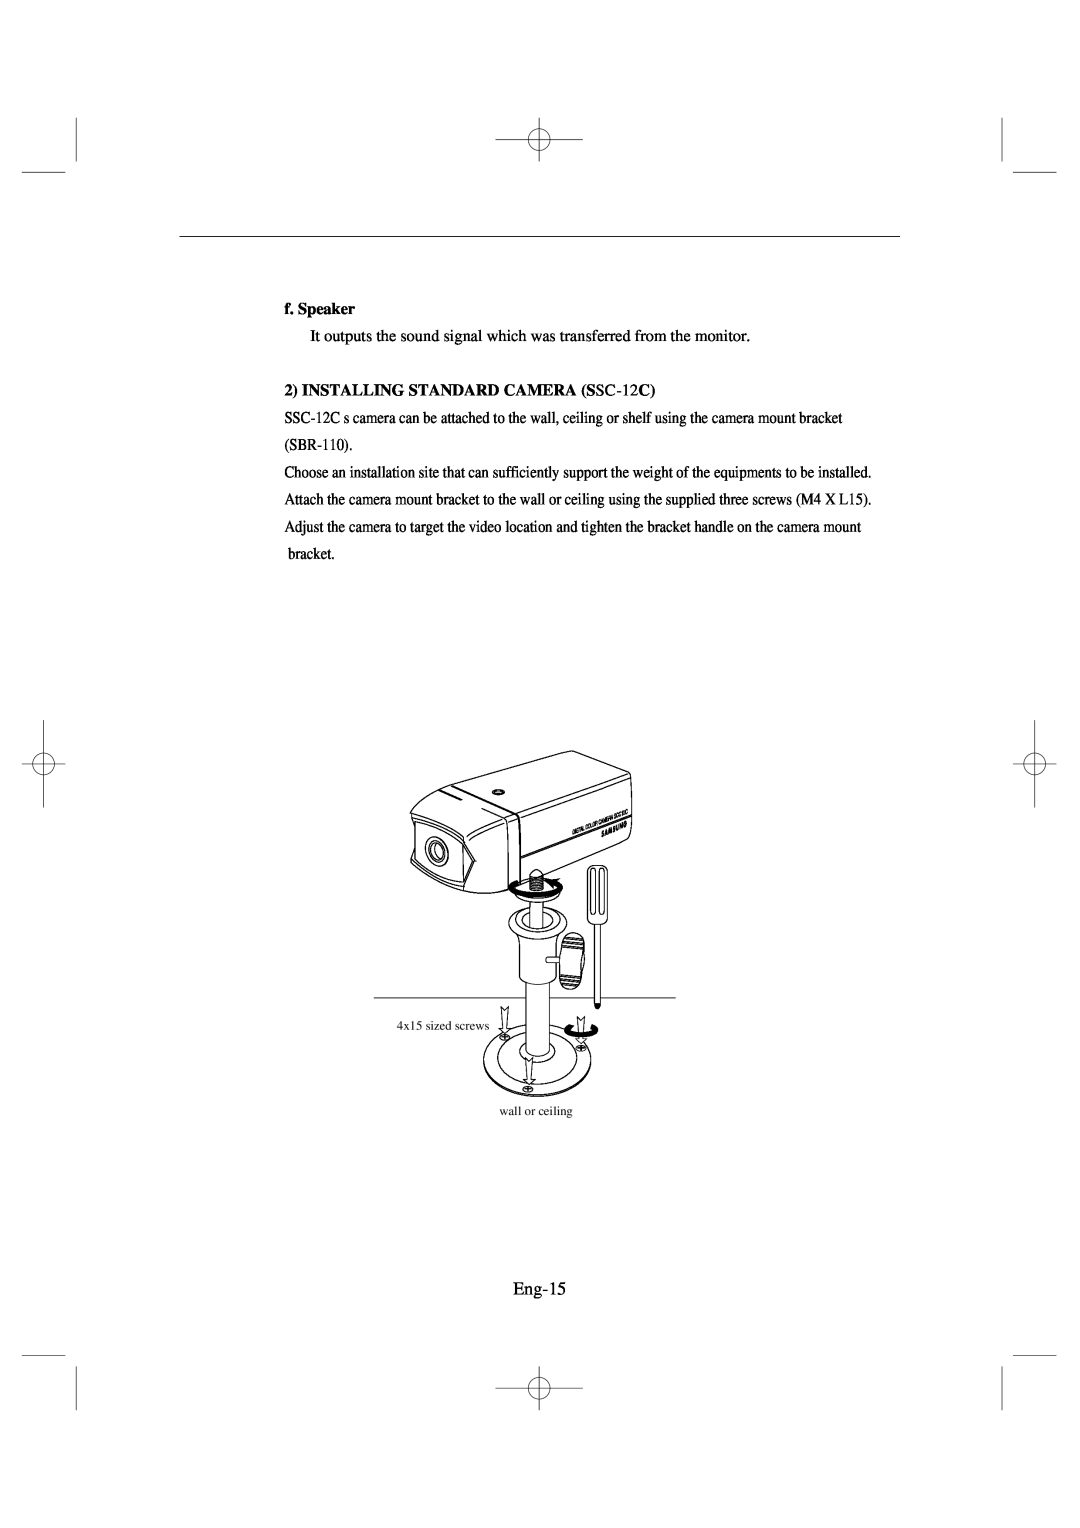 Samsung SSC17WEB manual Eng-15, f. Speaker, INSTALLING STANDARD CAMERA SSC-12C 